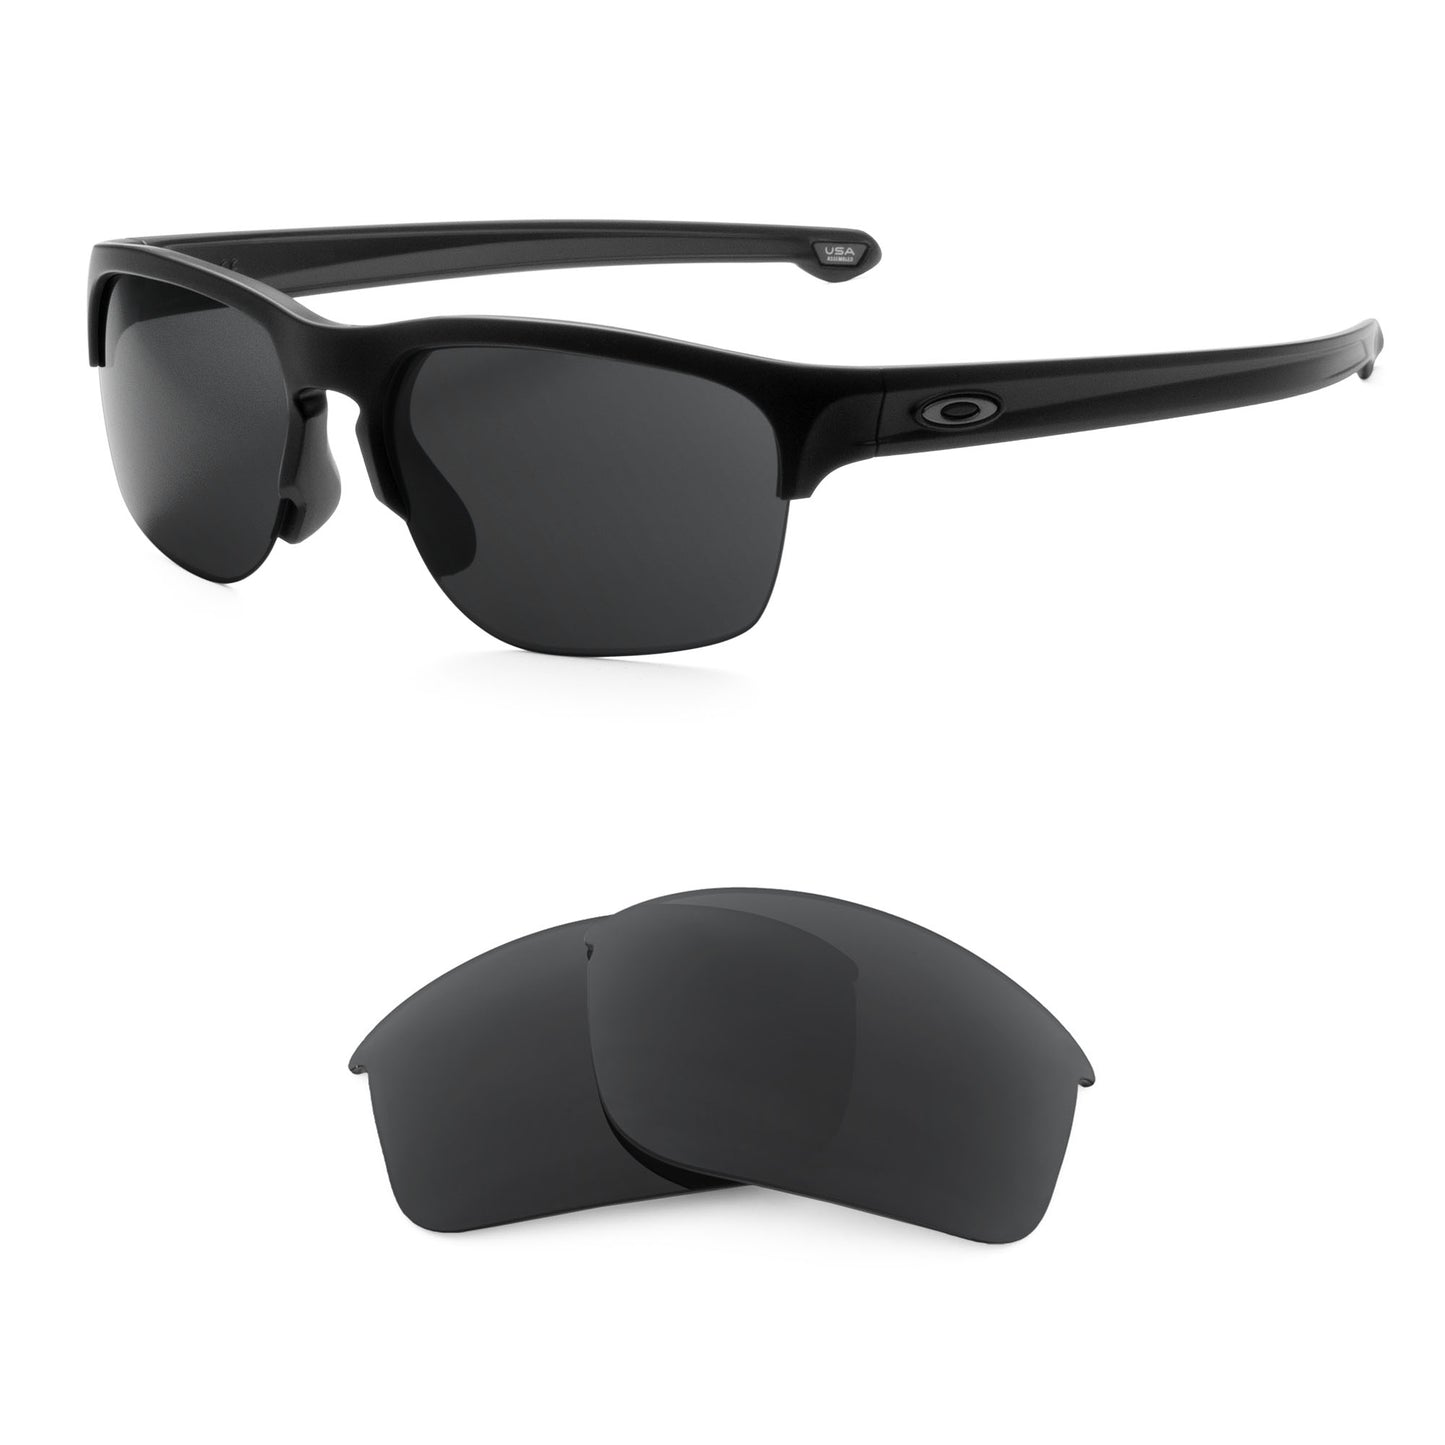 Oakley Sliver Edge (Low Bridge Fit) sunglasses with replacement lenses